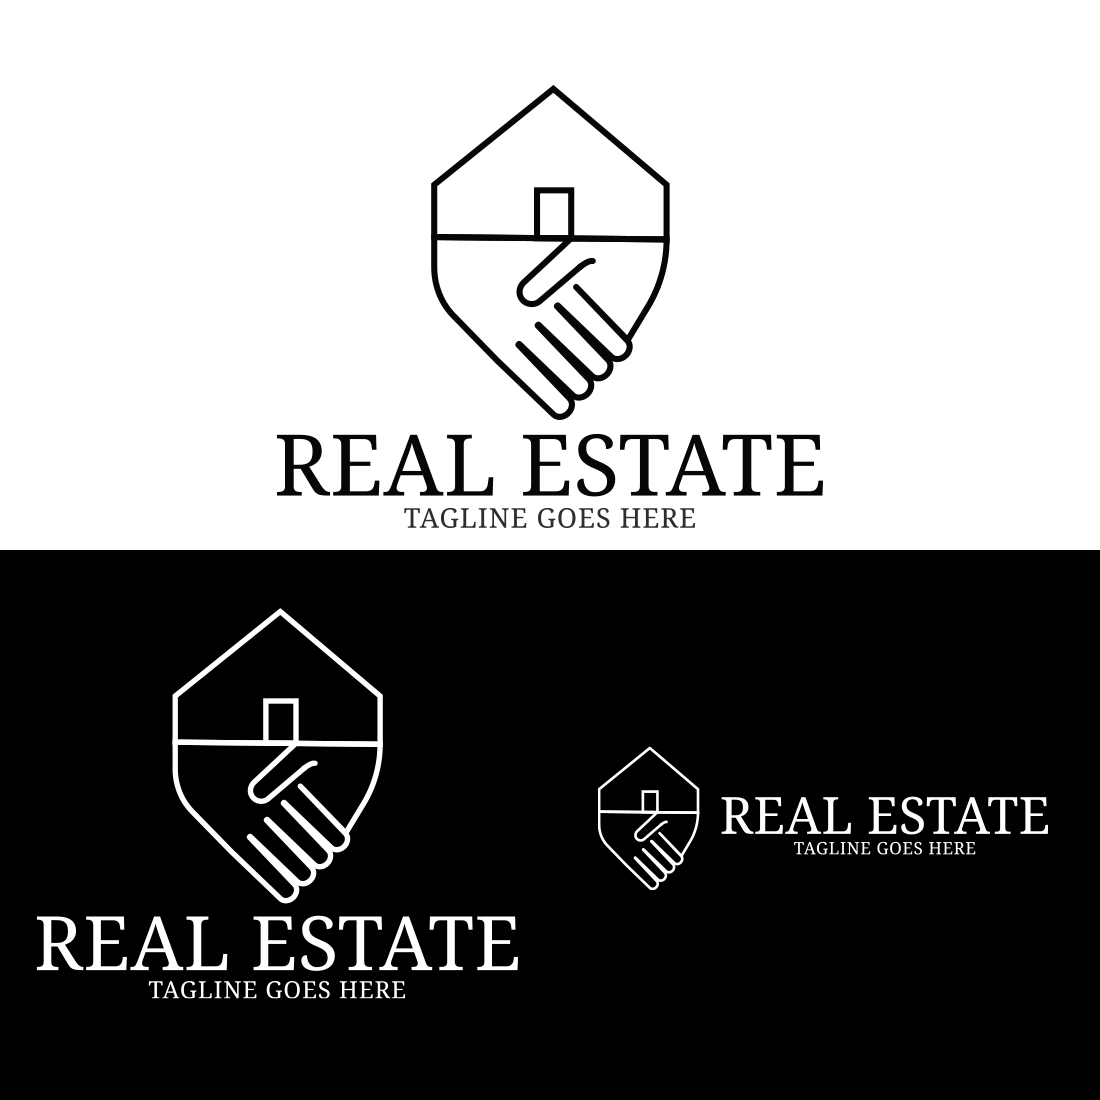 Real Estate logo preview image.